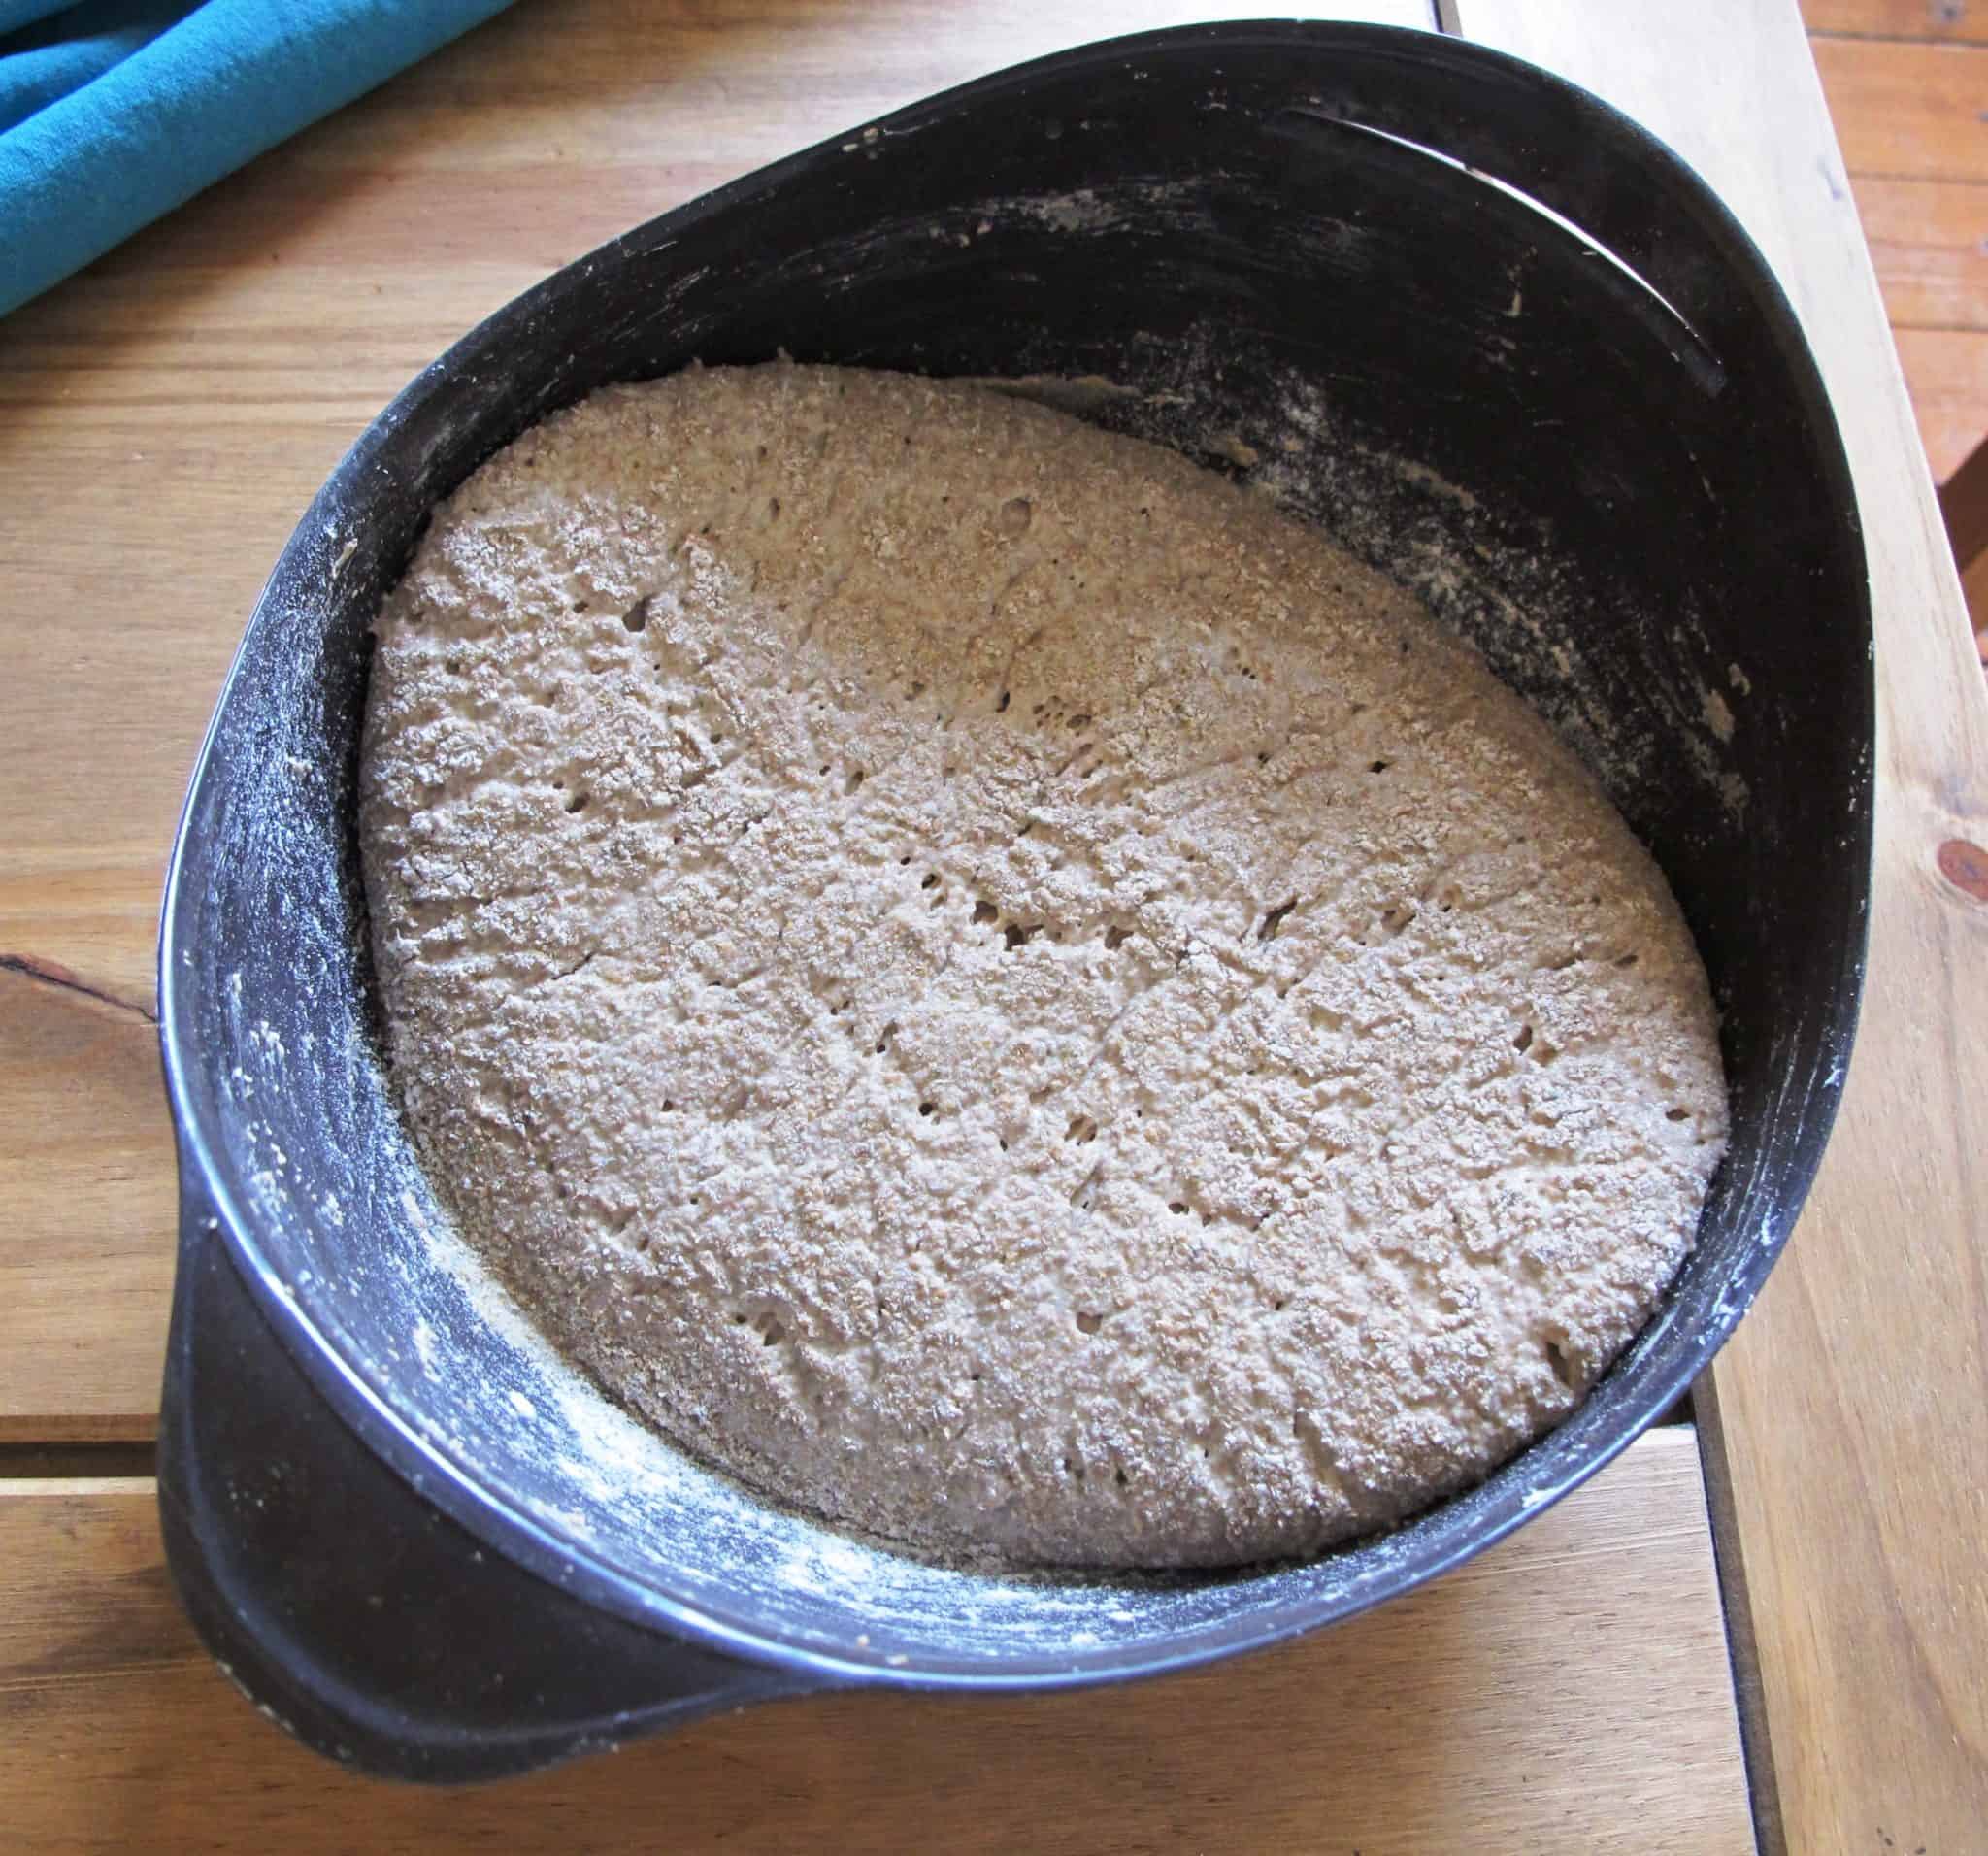 https://www.thebreadshebakes.com/wp-content/uploads/2014/03/Lekue-bread-maker-after-proving.jpg